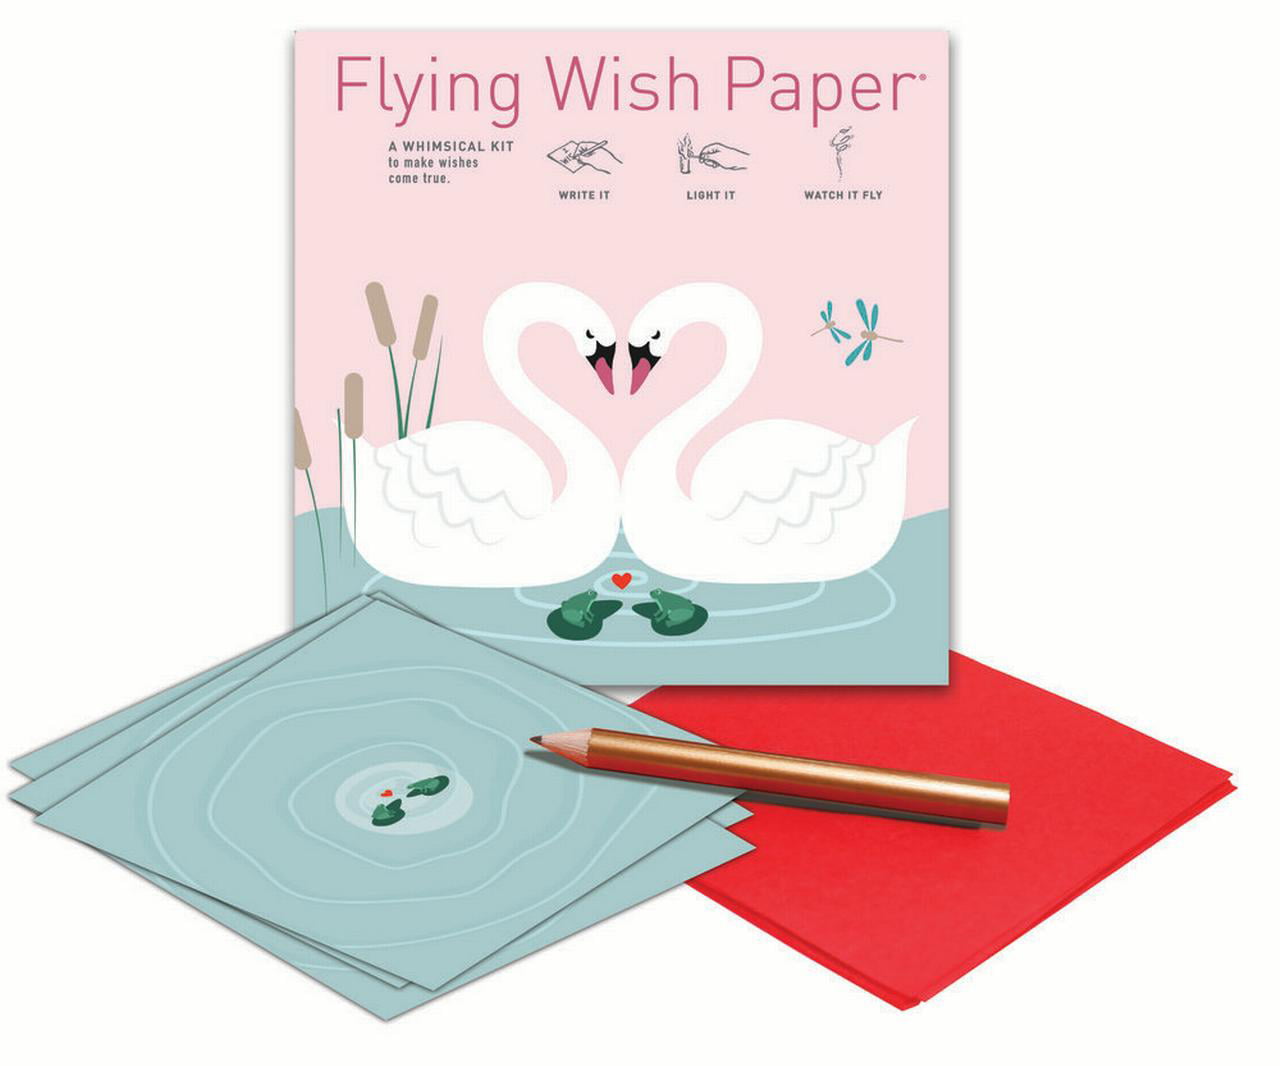 Flying Wish Paper 5 x 5 Mini Wishing Kit Licensed Original Artwork Love Letters 